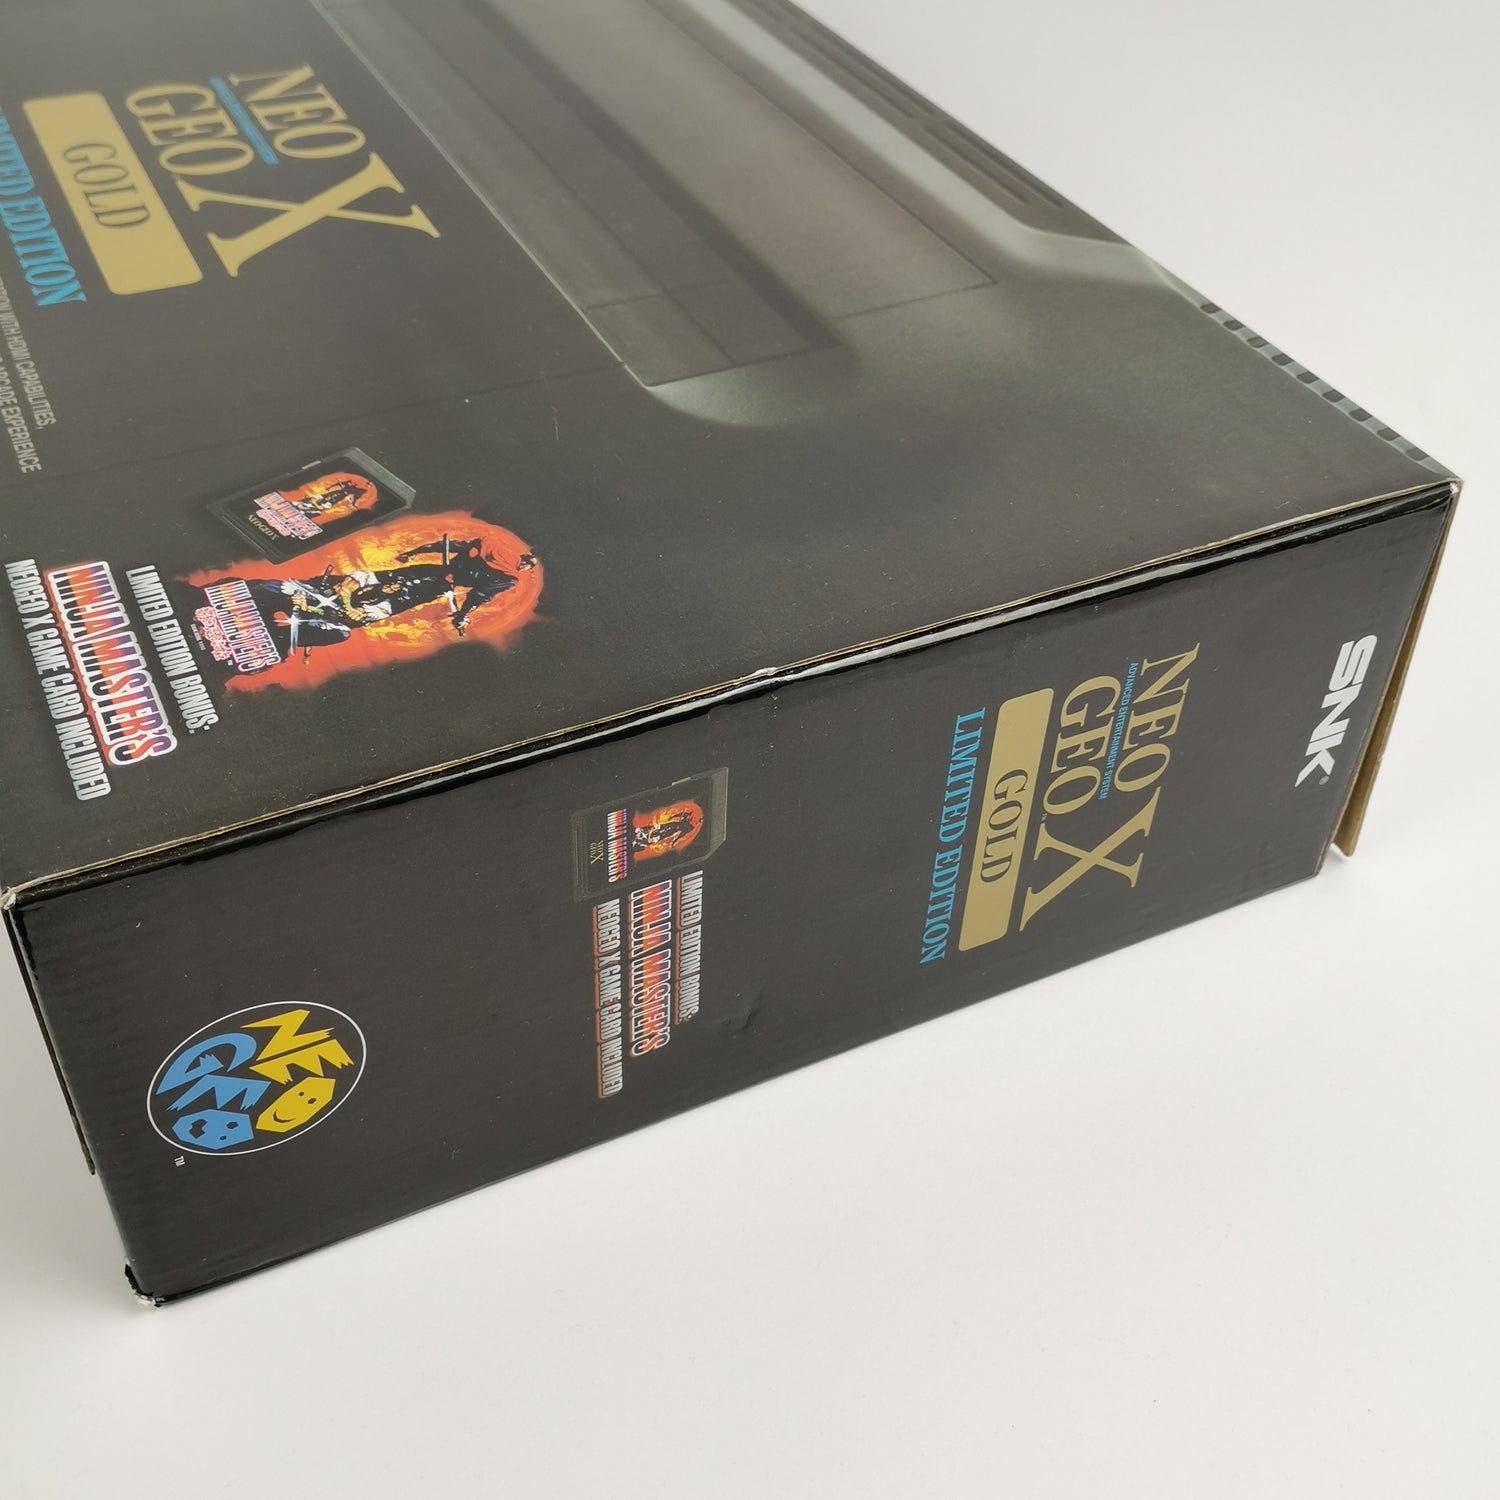 SNK Neo Geo X Gold Limited Edition | Neogeo X Station with Arcade Stick, handheld